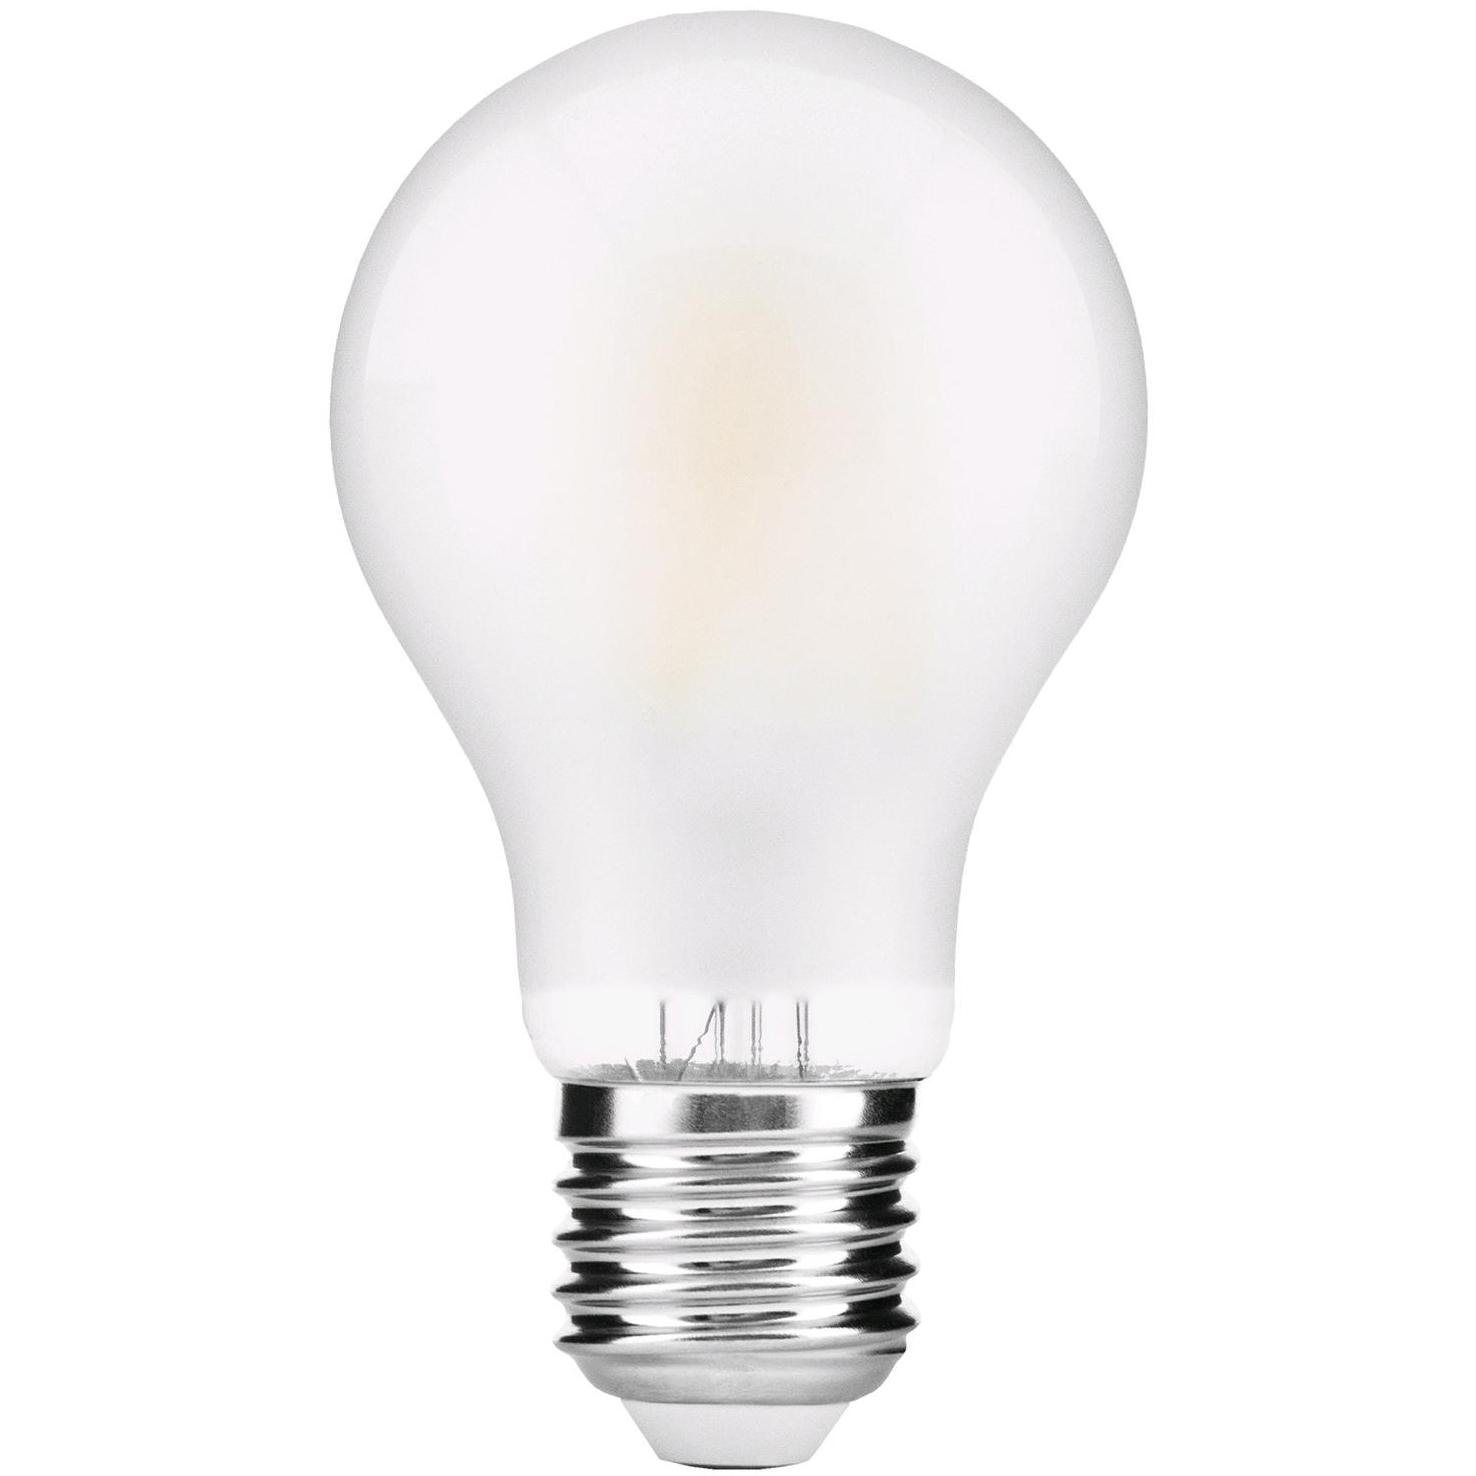 Pak om te zetten paradijs gereedschap Filament Led Lamp - 1500 Lumen - Philips - Lamptype: E27 - Led, Vermogen: 11  Watt - 230 Volt, Lichtsterkte: 1500 lumen, Afmetingen: Ø70mm/H124mm,  Lichtkleur: Extra warm wit - 2700 K.